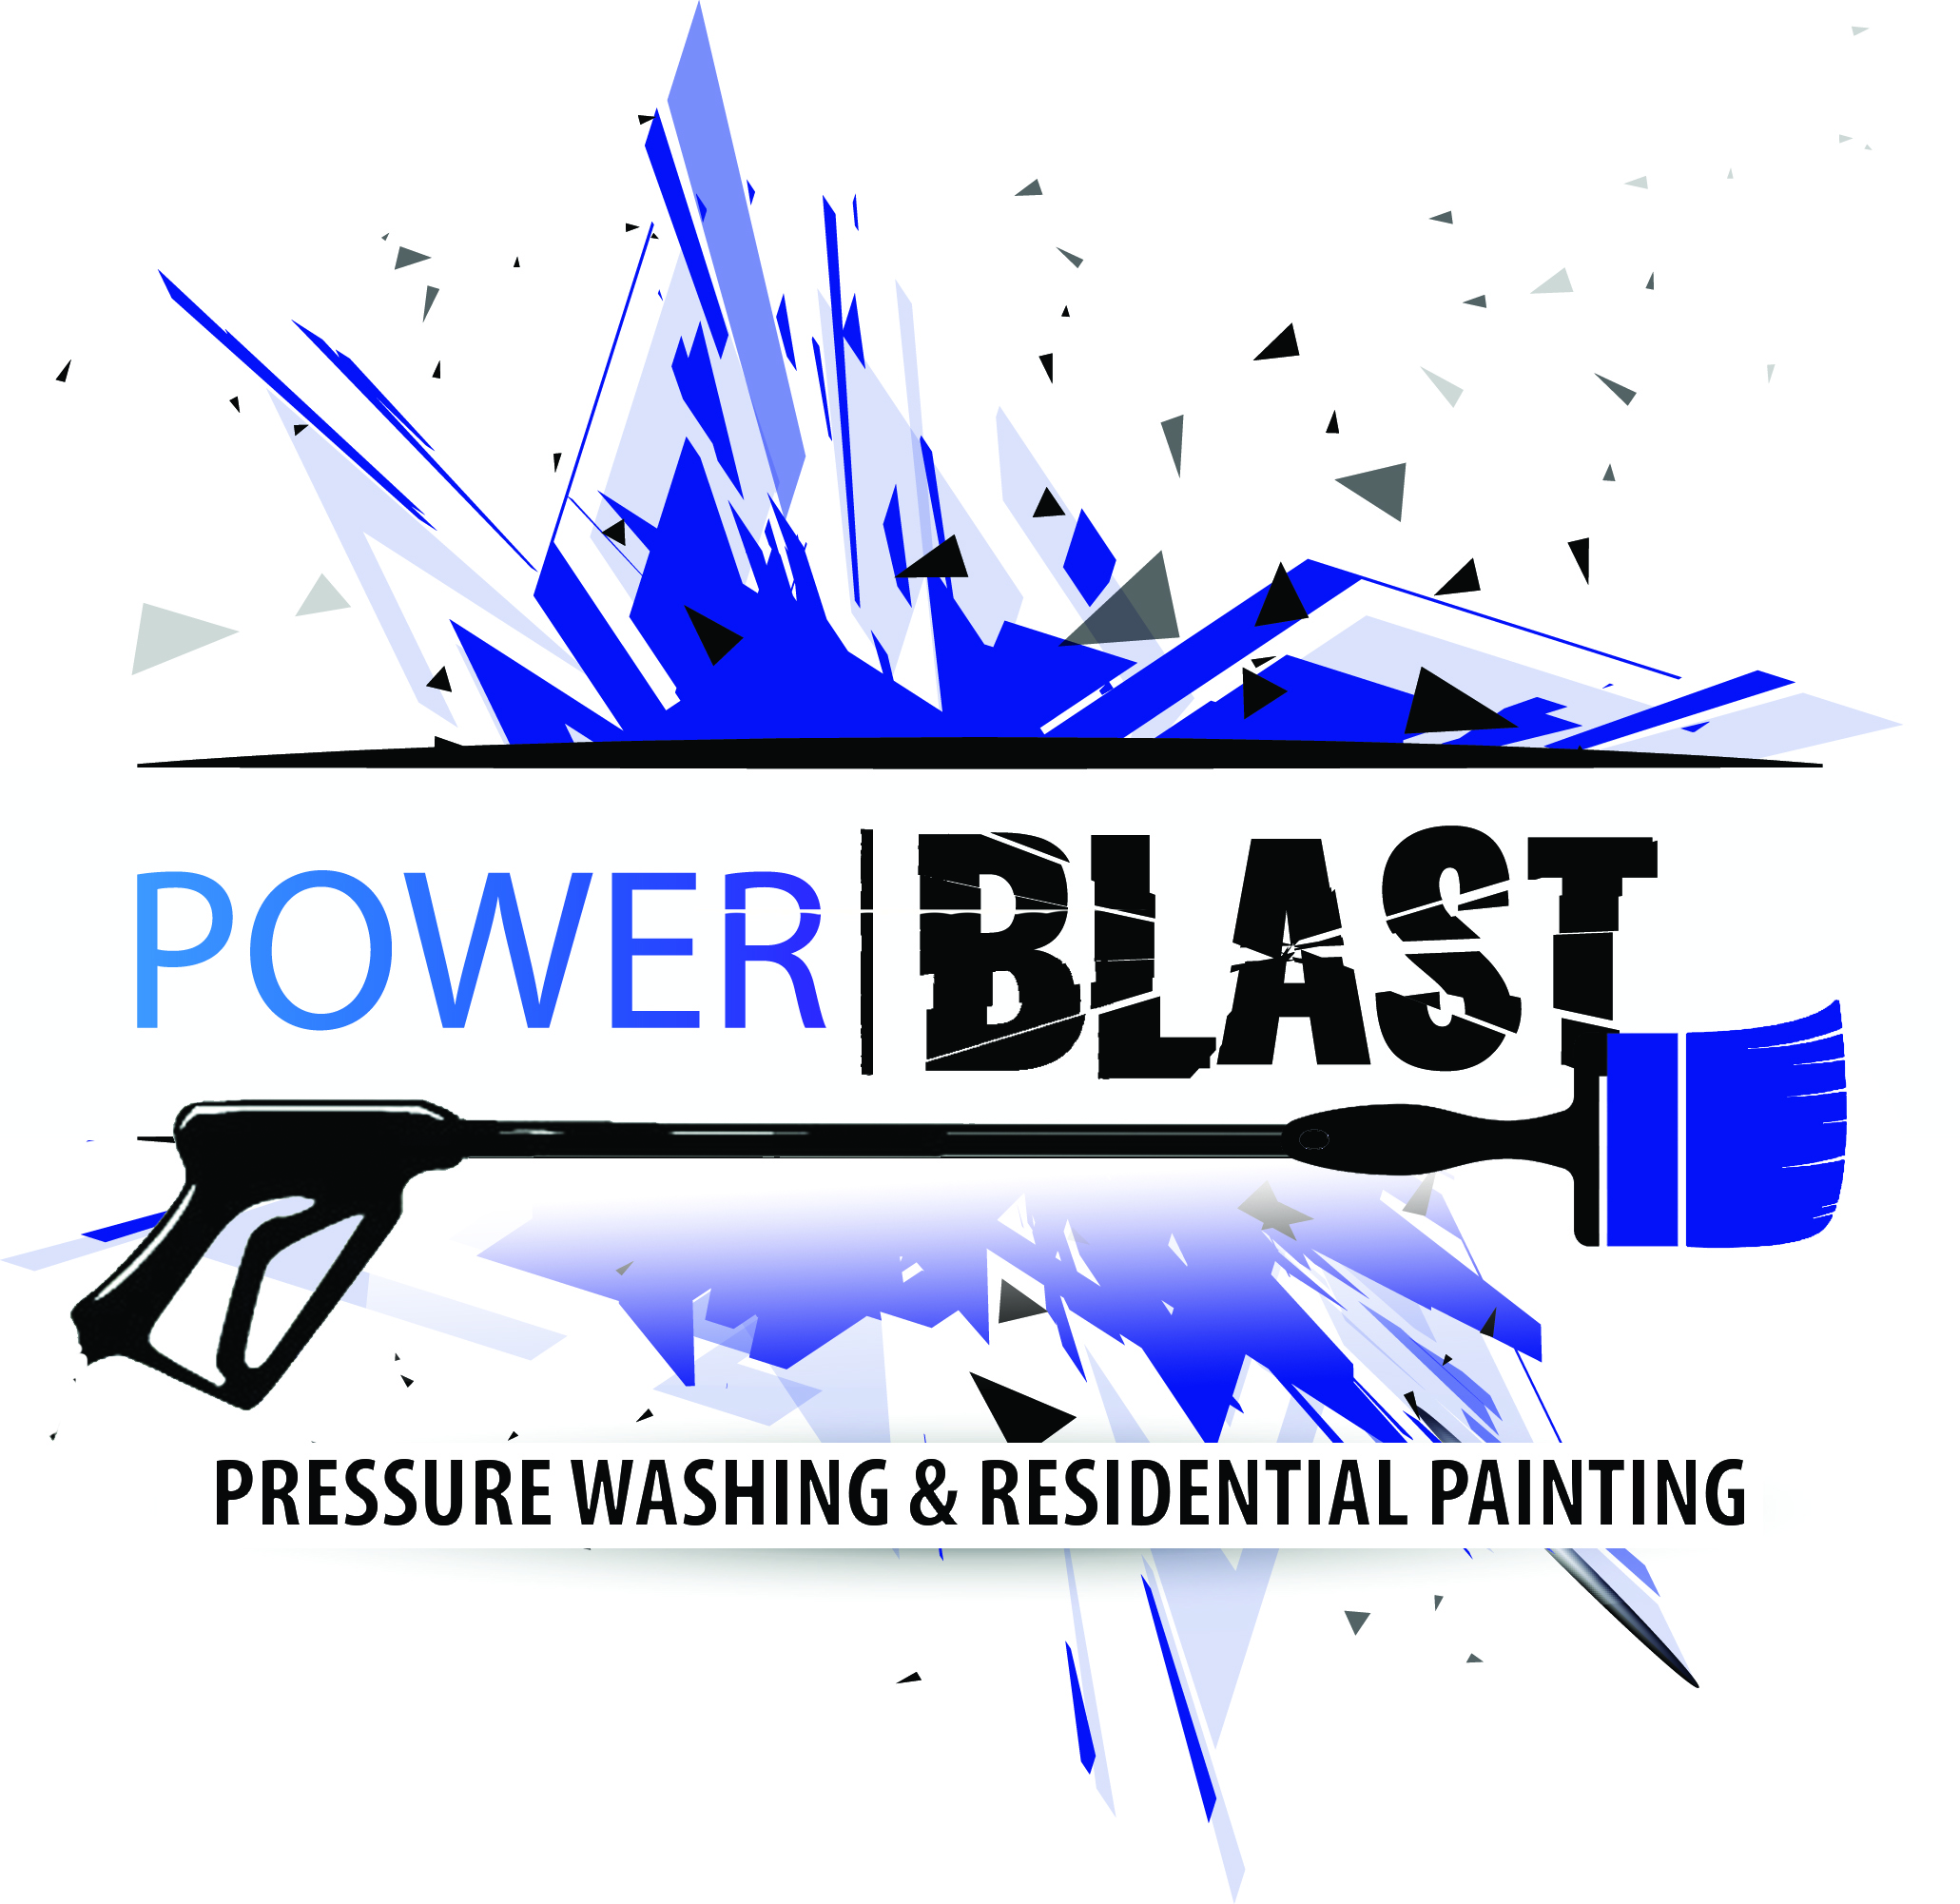 Power Blast Services, Pressure Washing & Painting